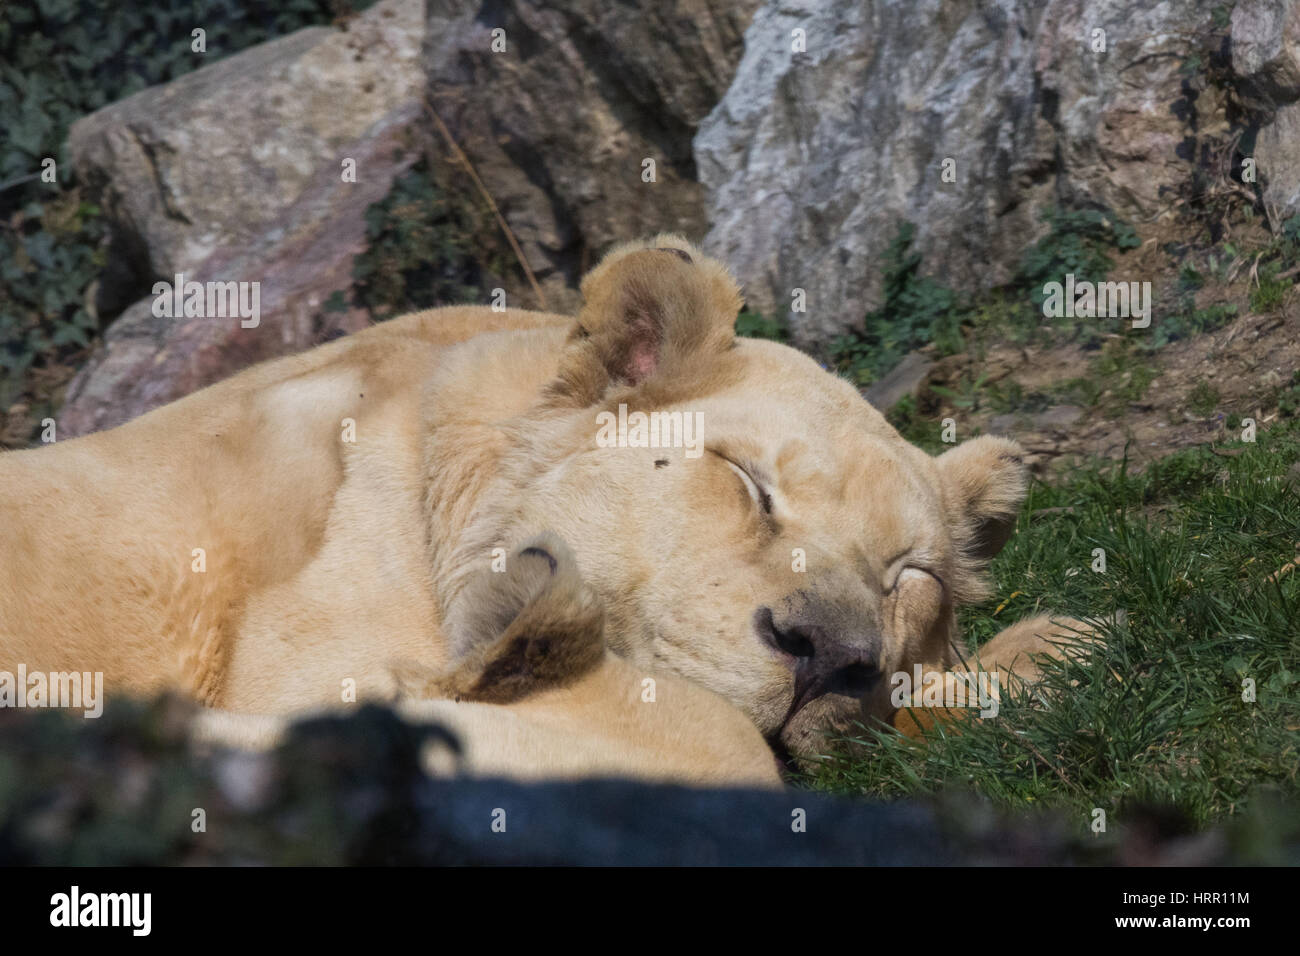 lioness sleeping on the grass, horizontal image, Leonessa dorme distesa sull'erba. Stock Photo